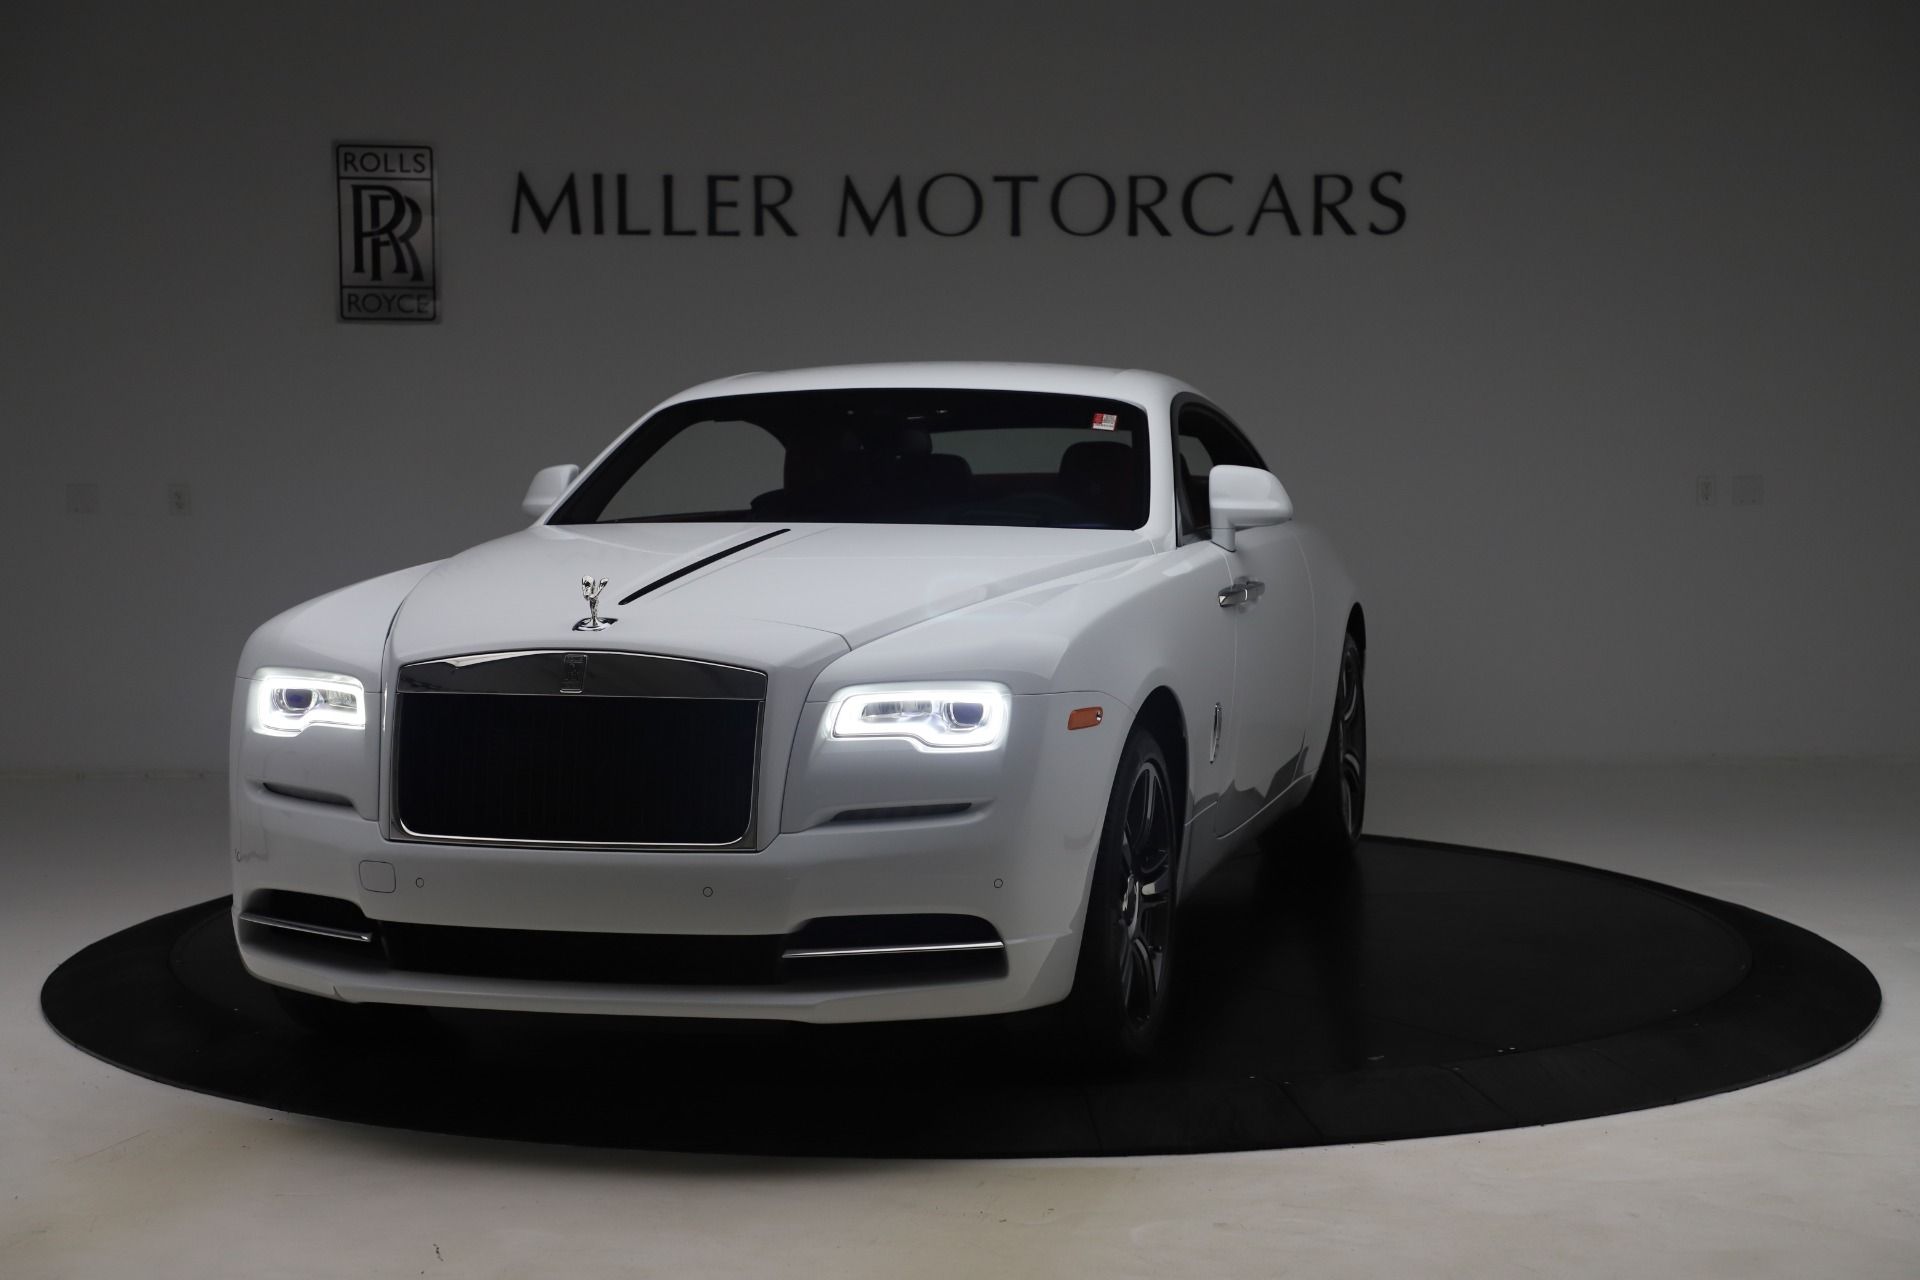 New 2020 Rolls Royce Wraith ($325). McLaren